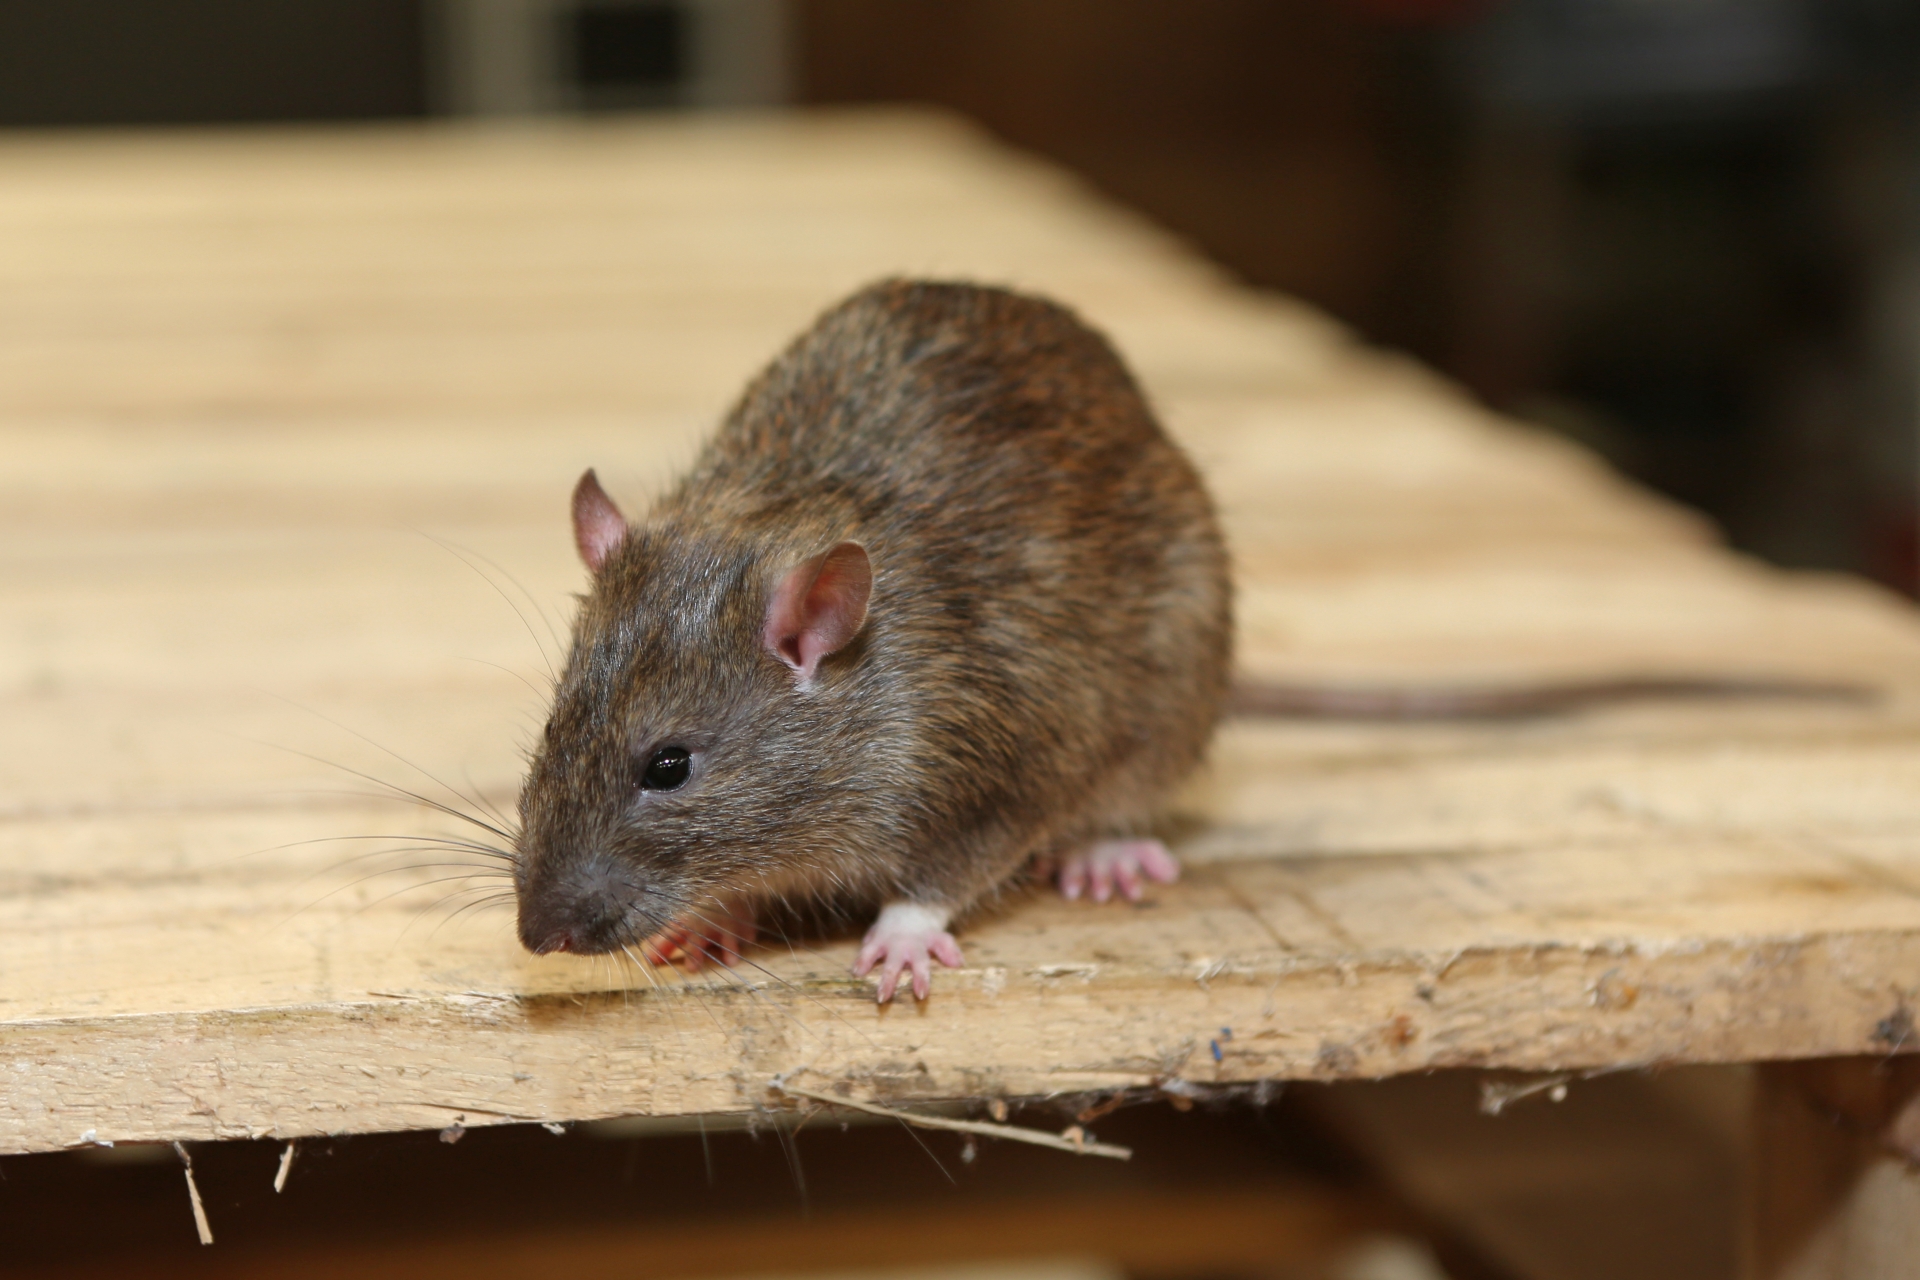 Rat extermination, Pest Control in Mayfair, Marylebone, W1. Call Now 020 8166 9746